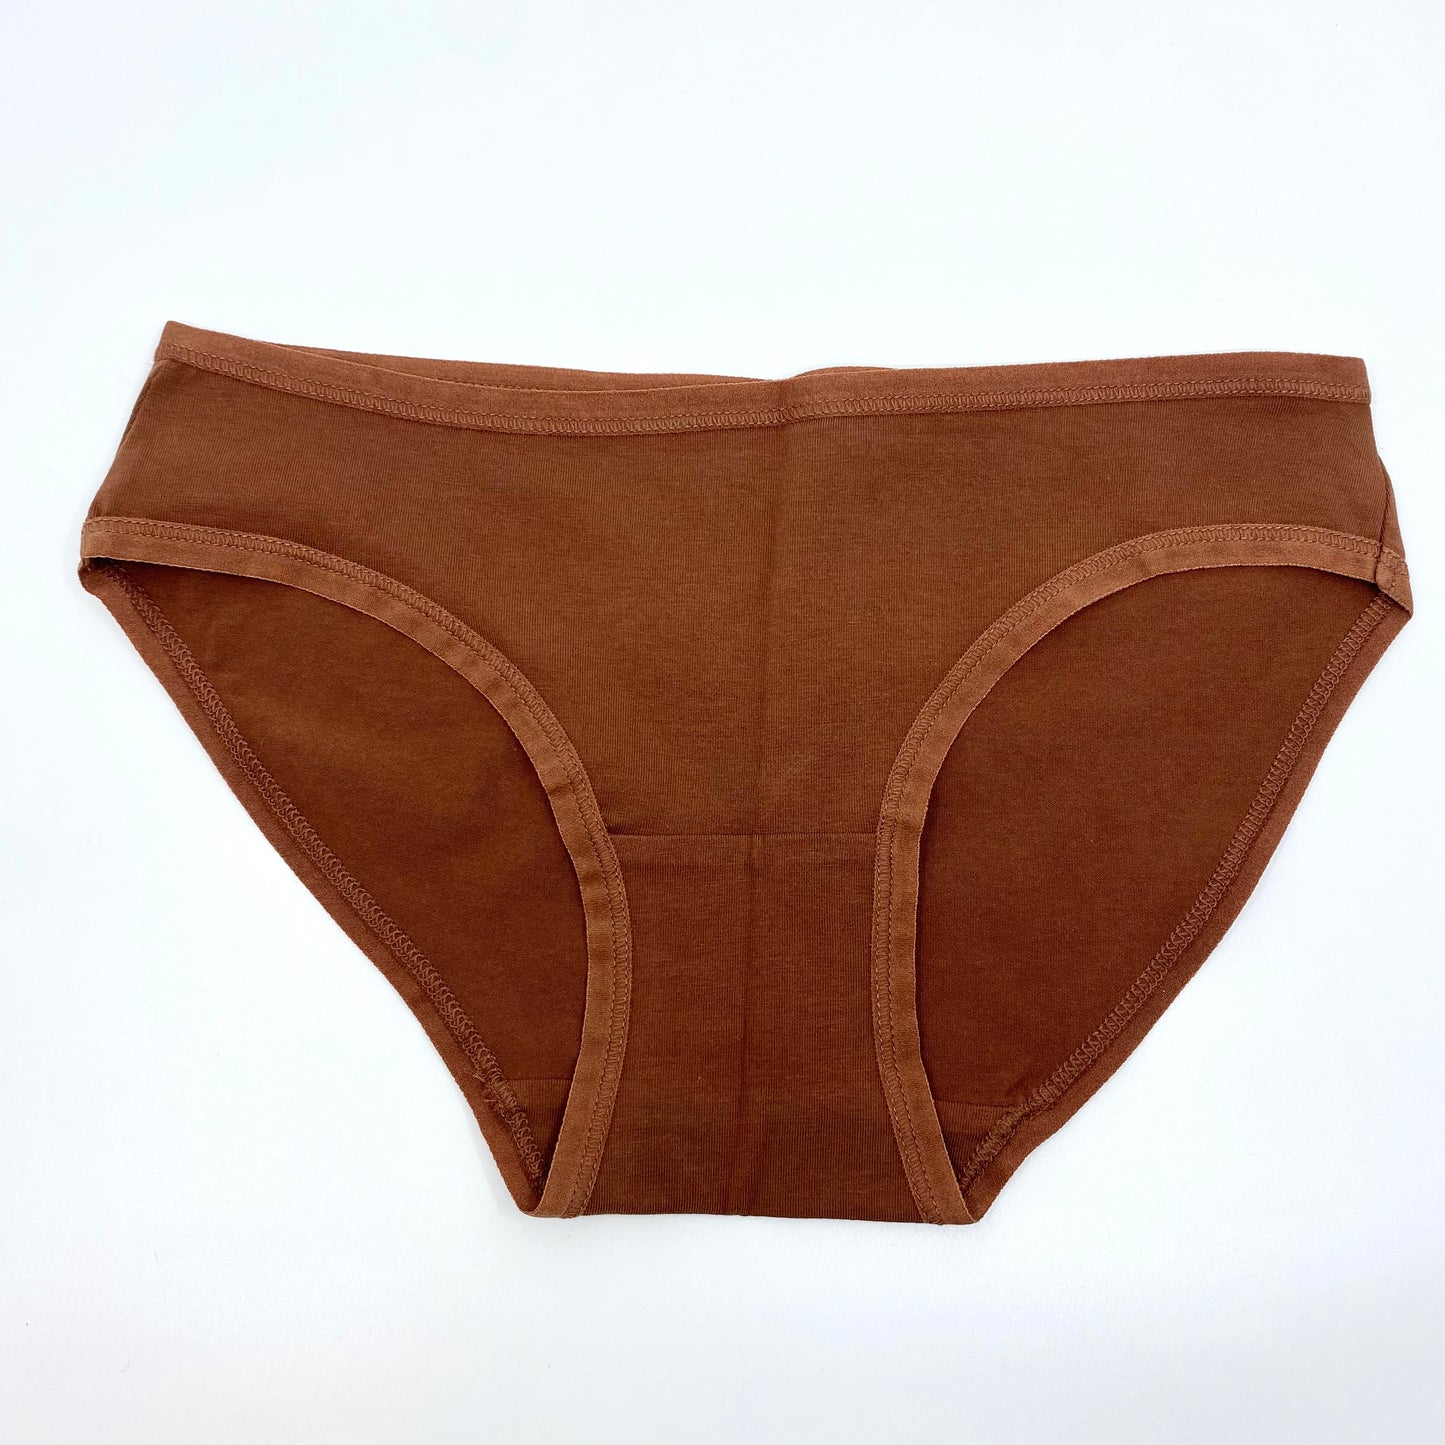 Women's organic cotton low-rise bikini bottoms in chestnut (mid nude)